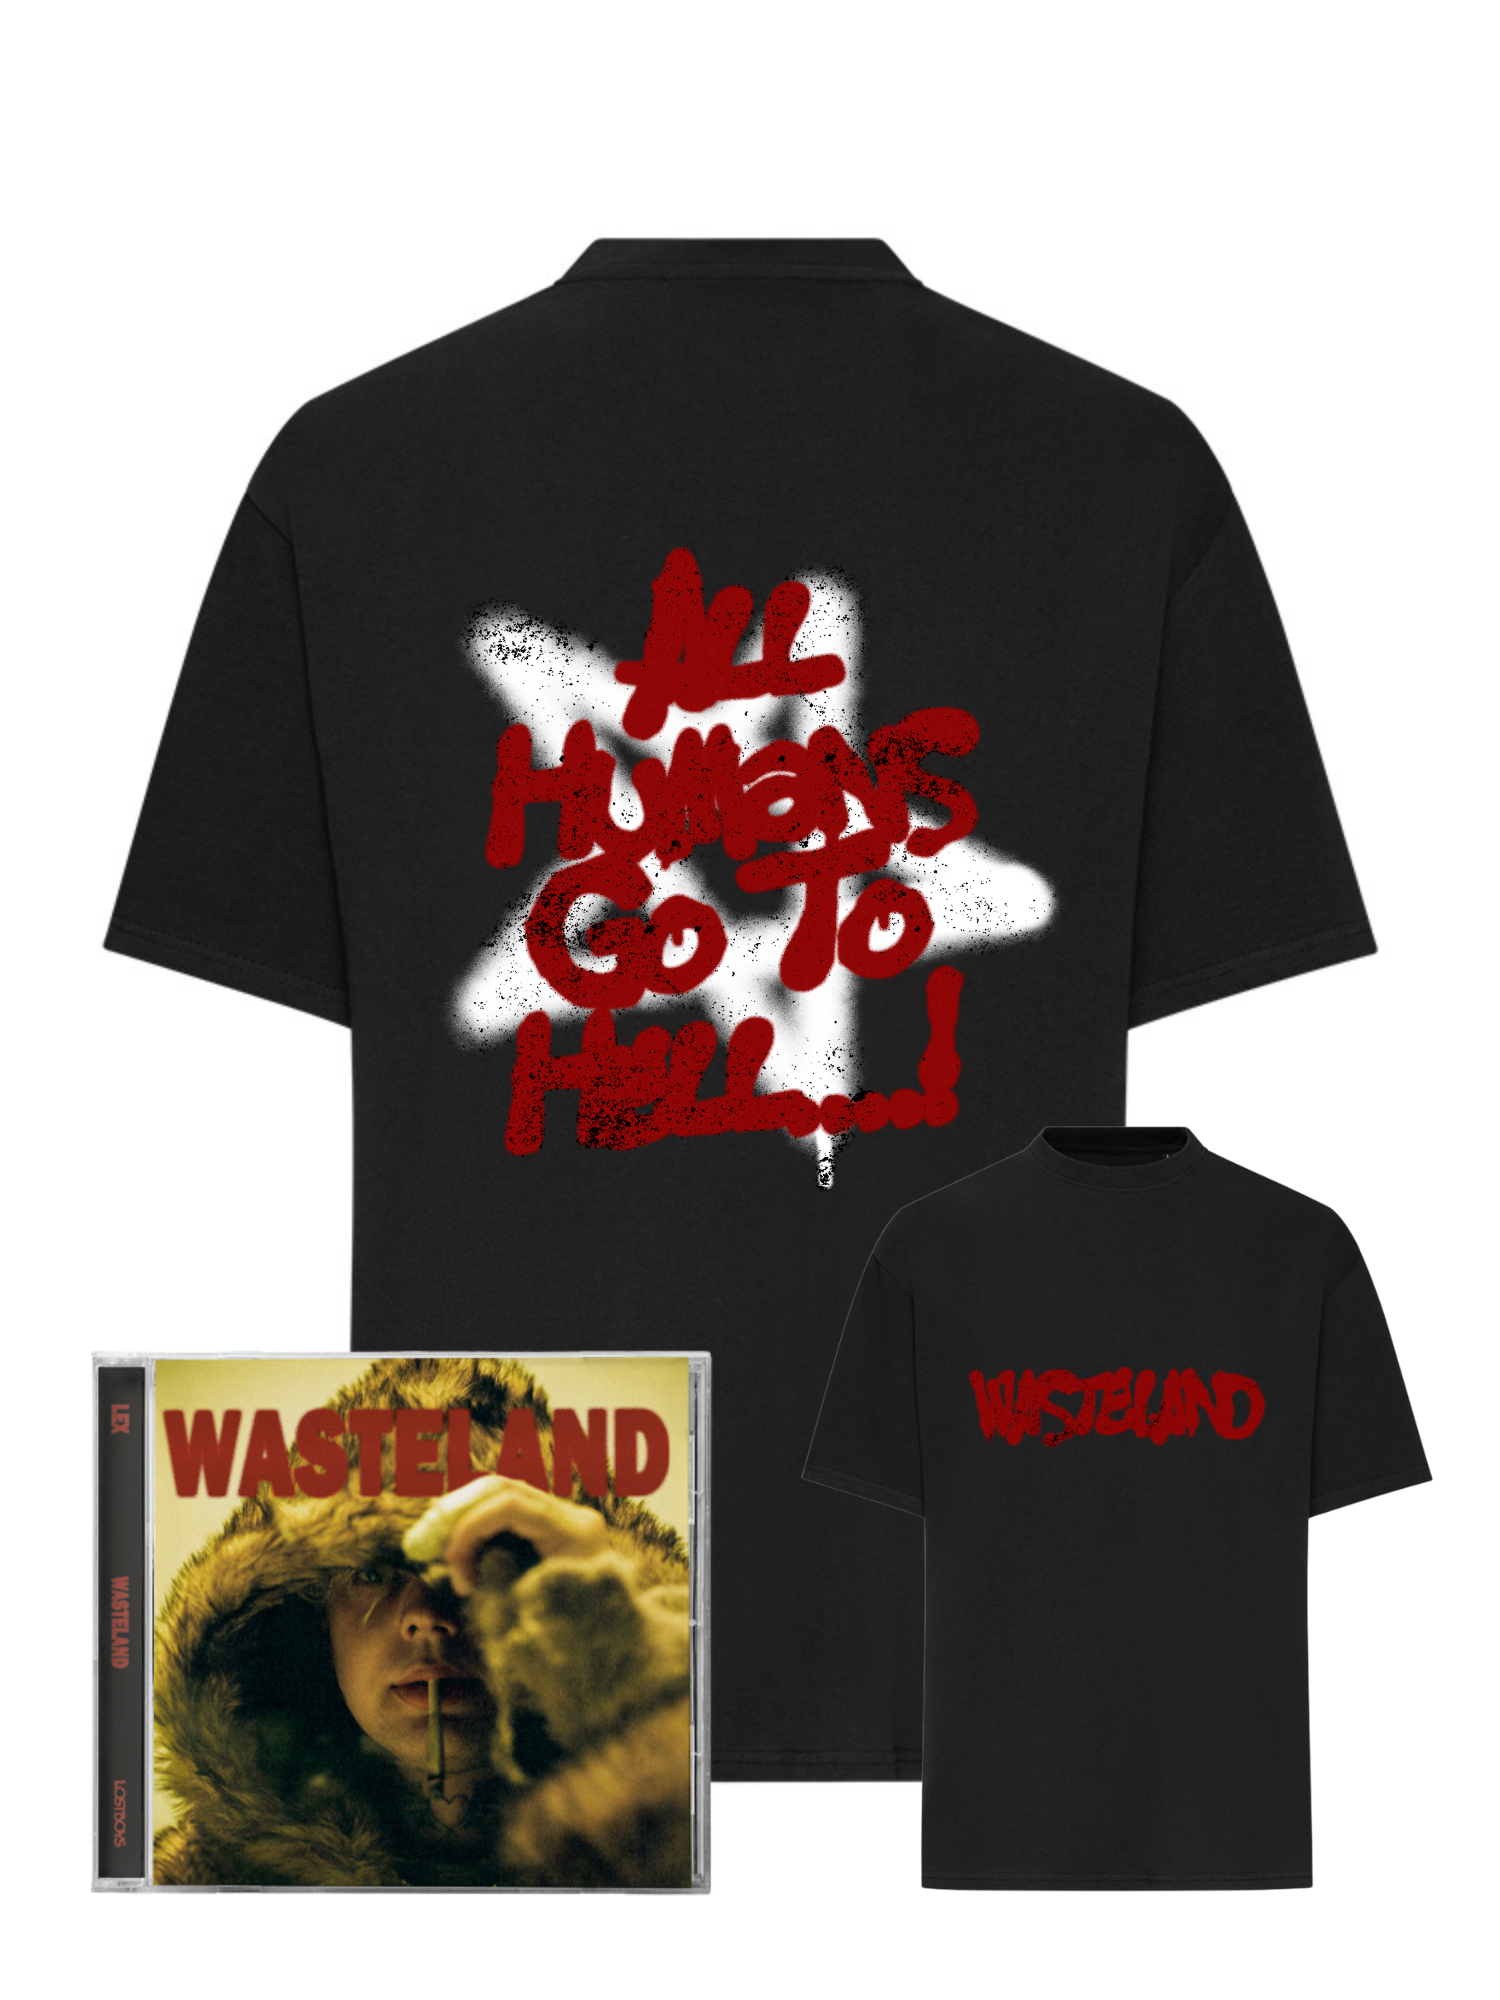 WASTELAND - CD & T-Shirt Bundle